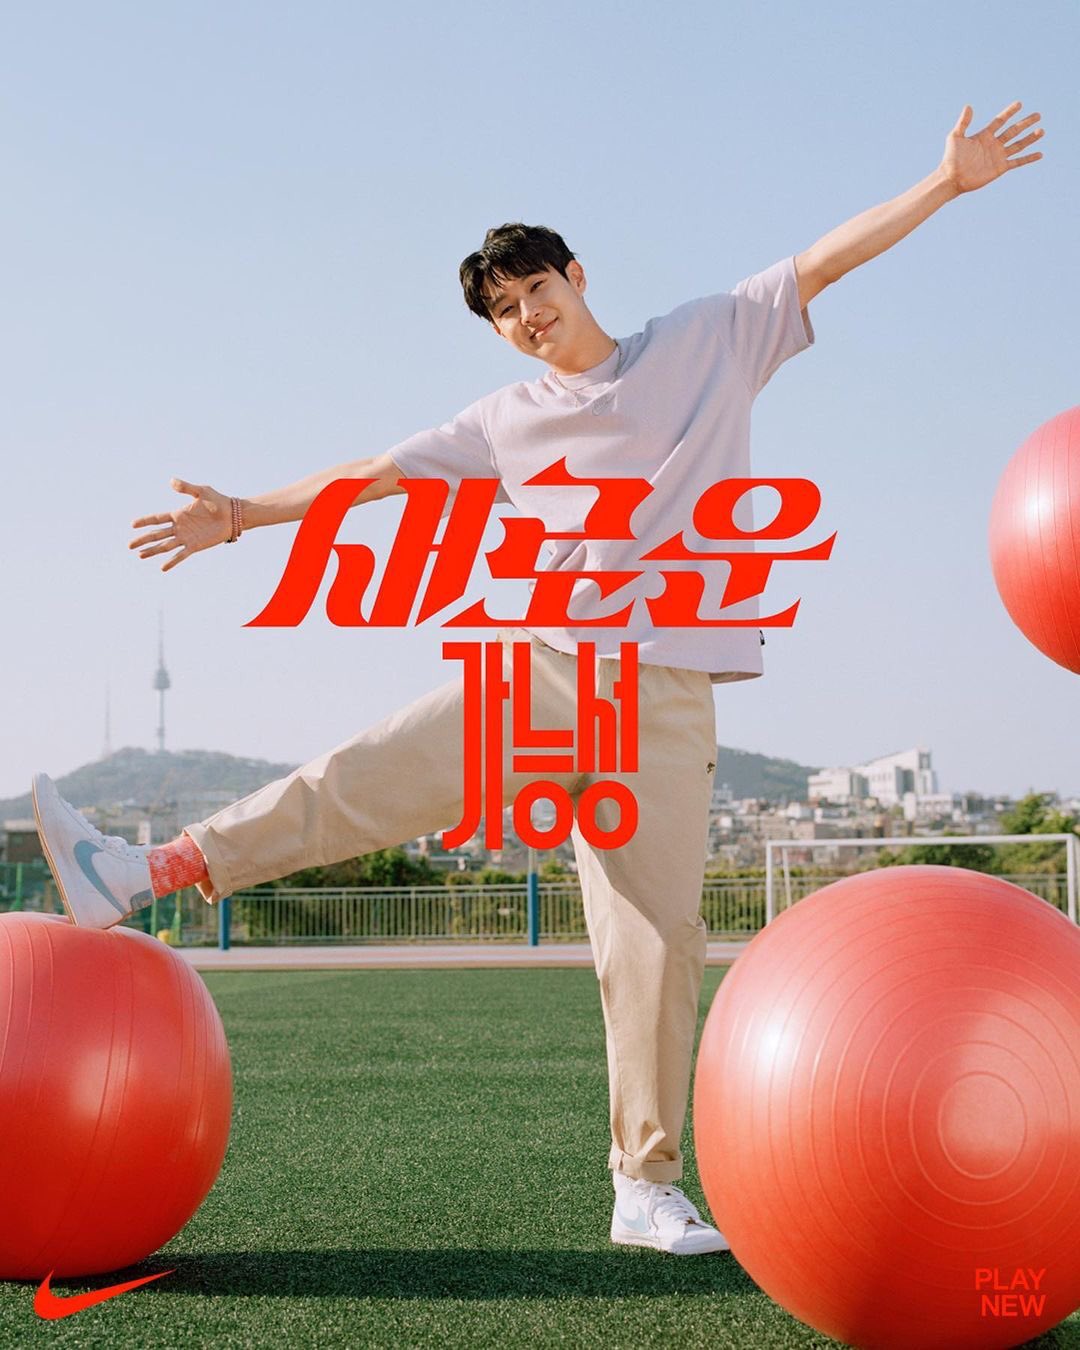 Choi woo shik in an ad campaign for Nike Korea